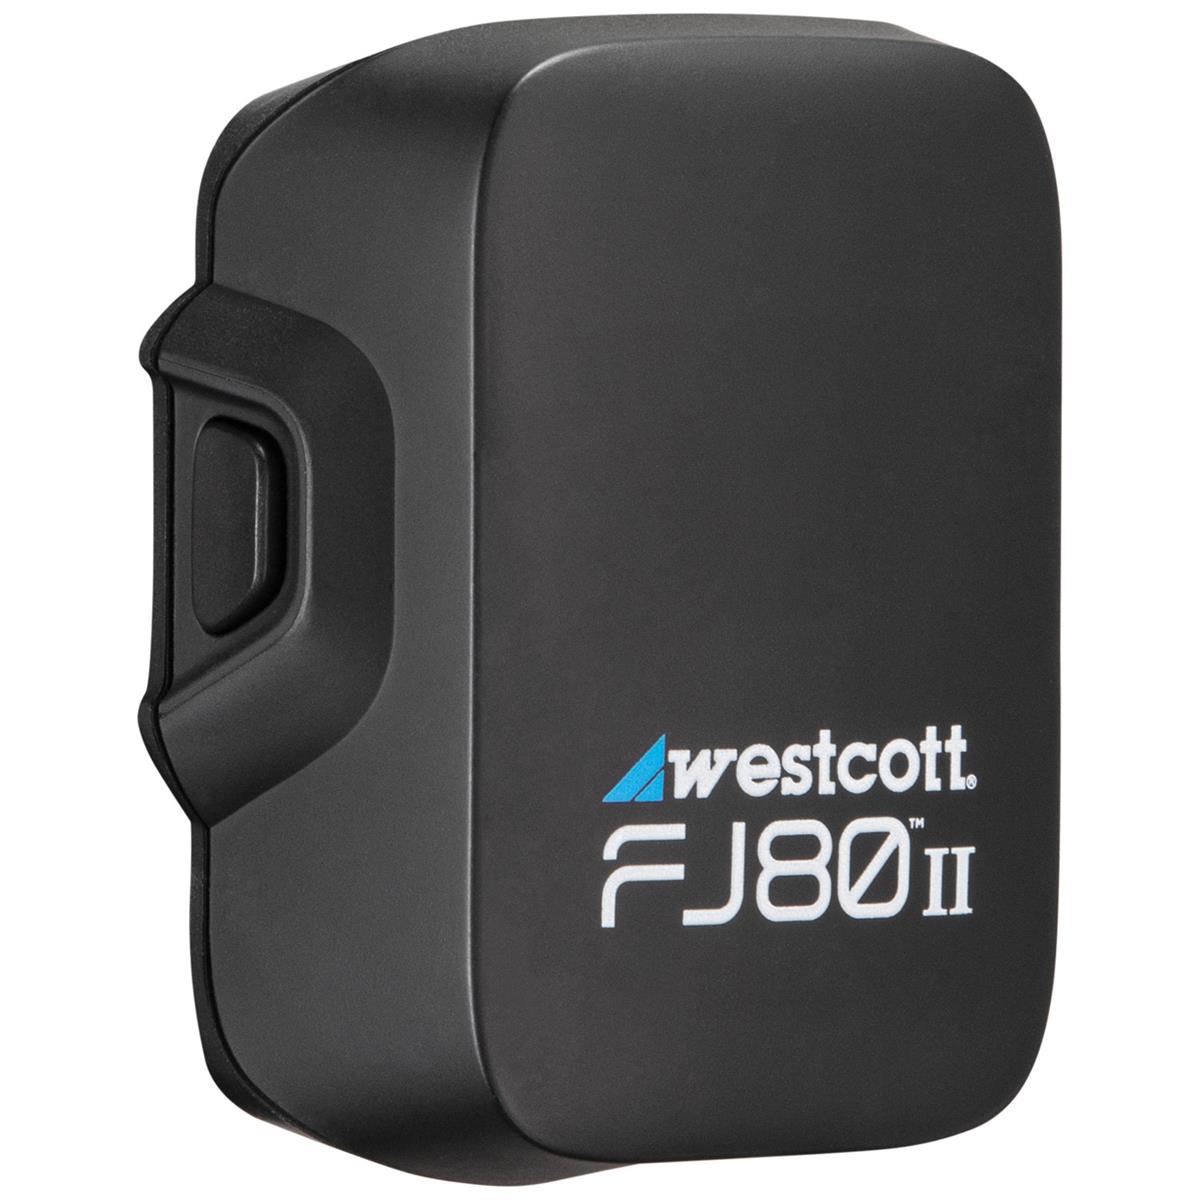 

Westcott 11Wh 11.1V 1600mAh DC Li-Po Battery for FJ80 II TTL Speedlight Flash